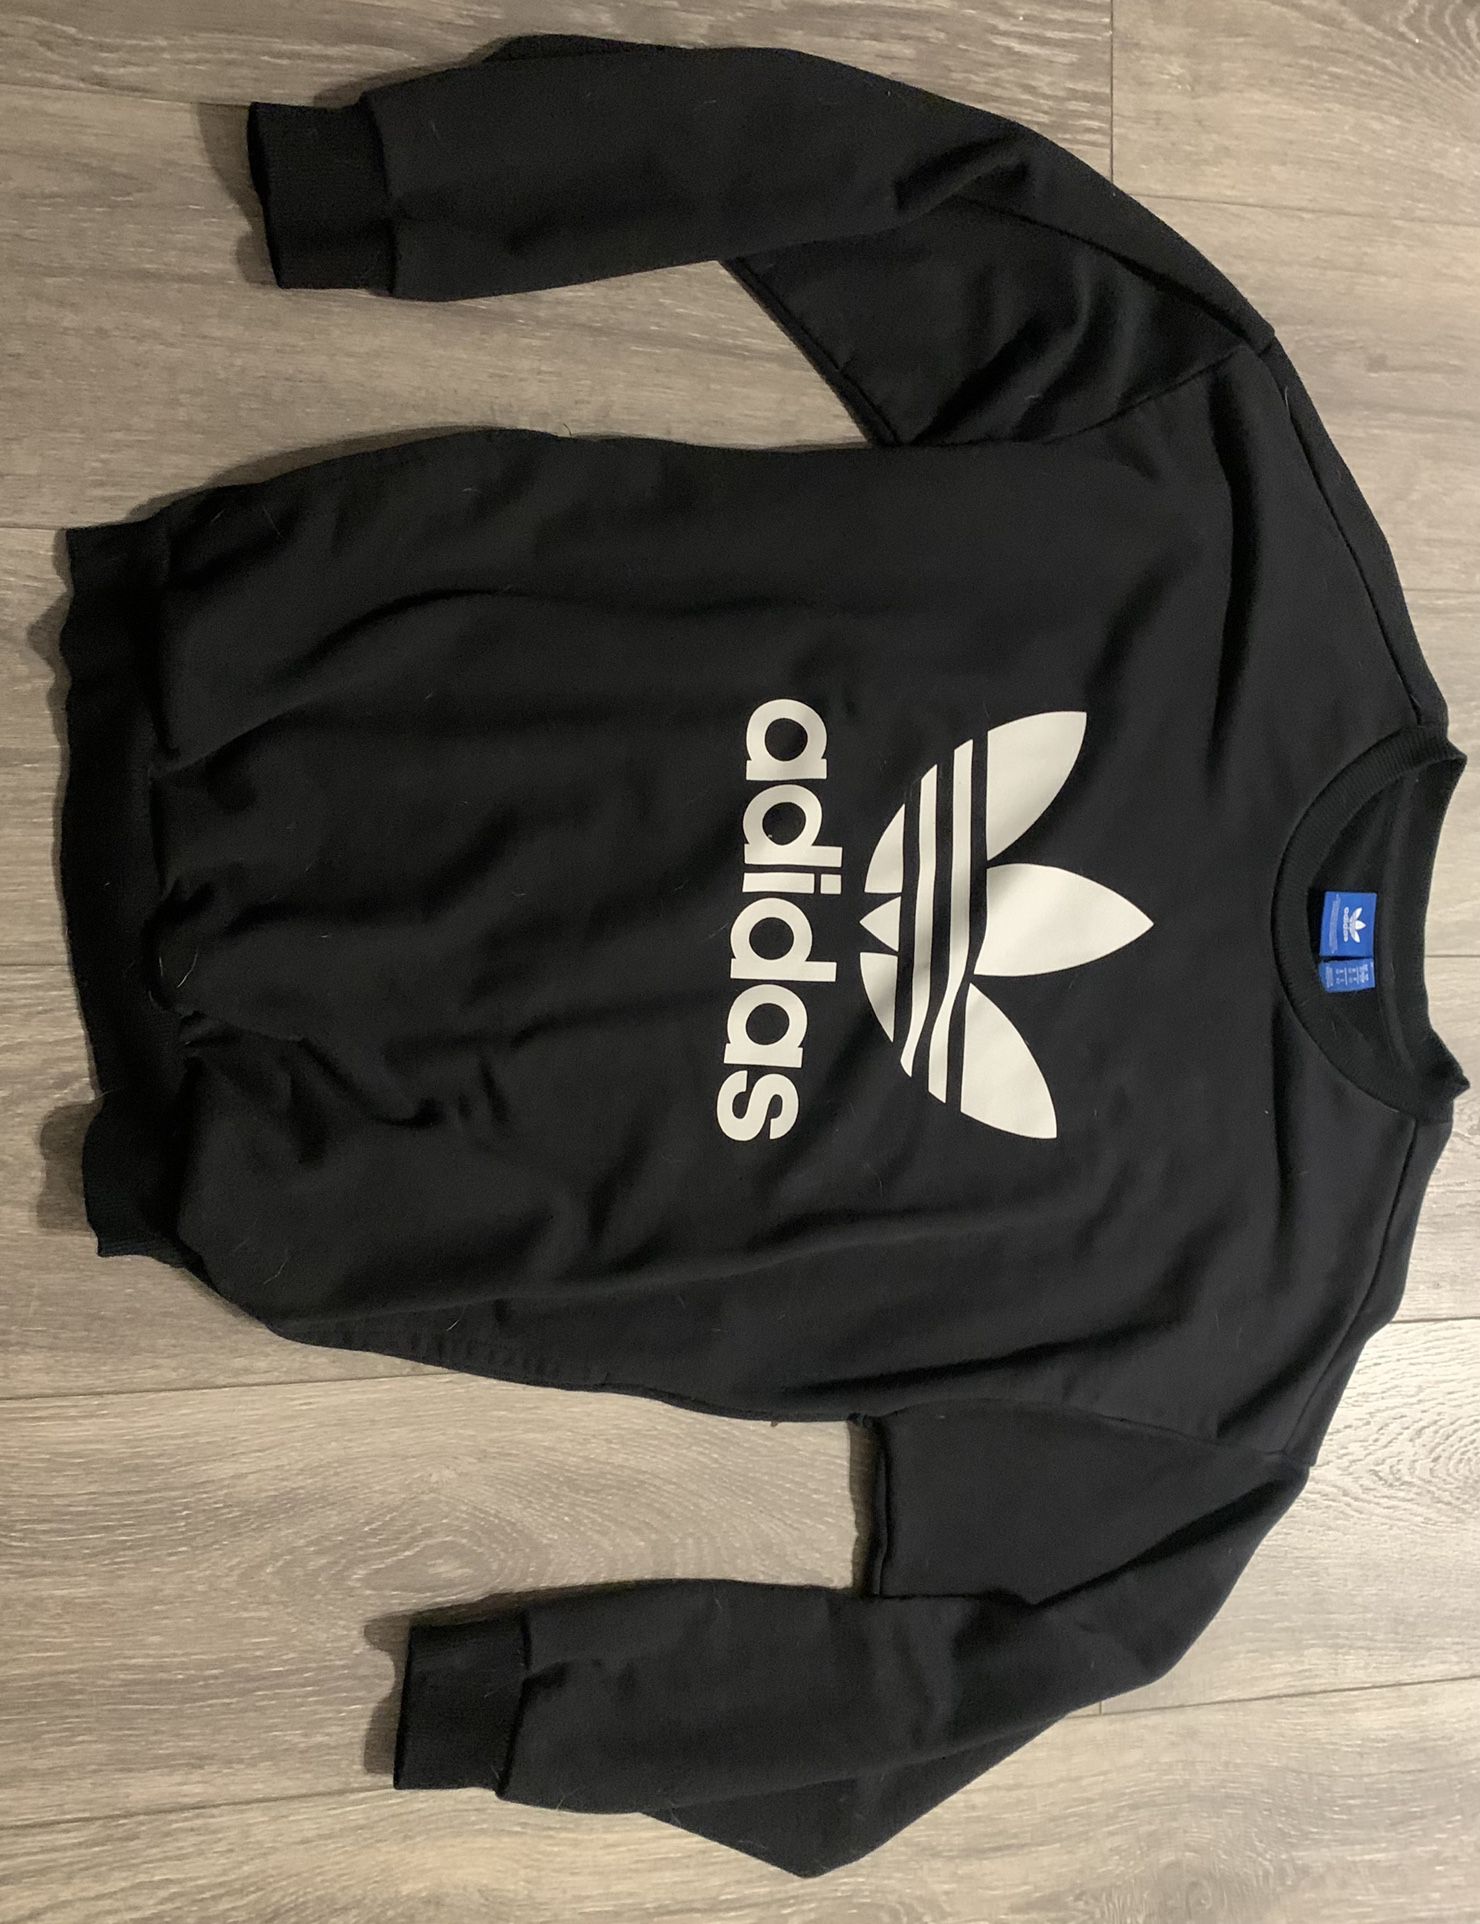 Adidas Sweatshirt - New, Size Small 